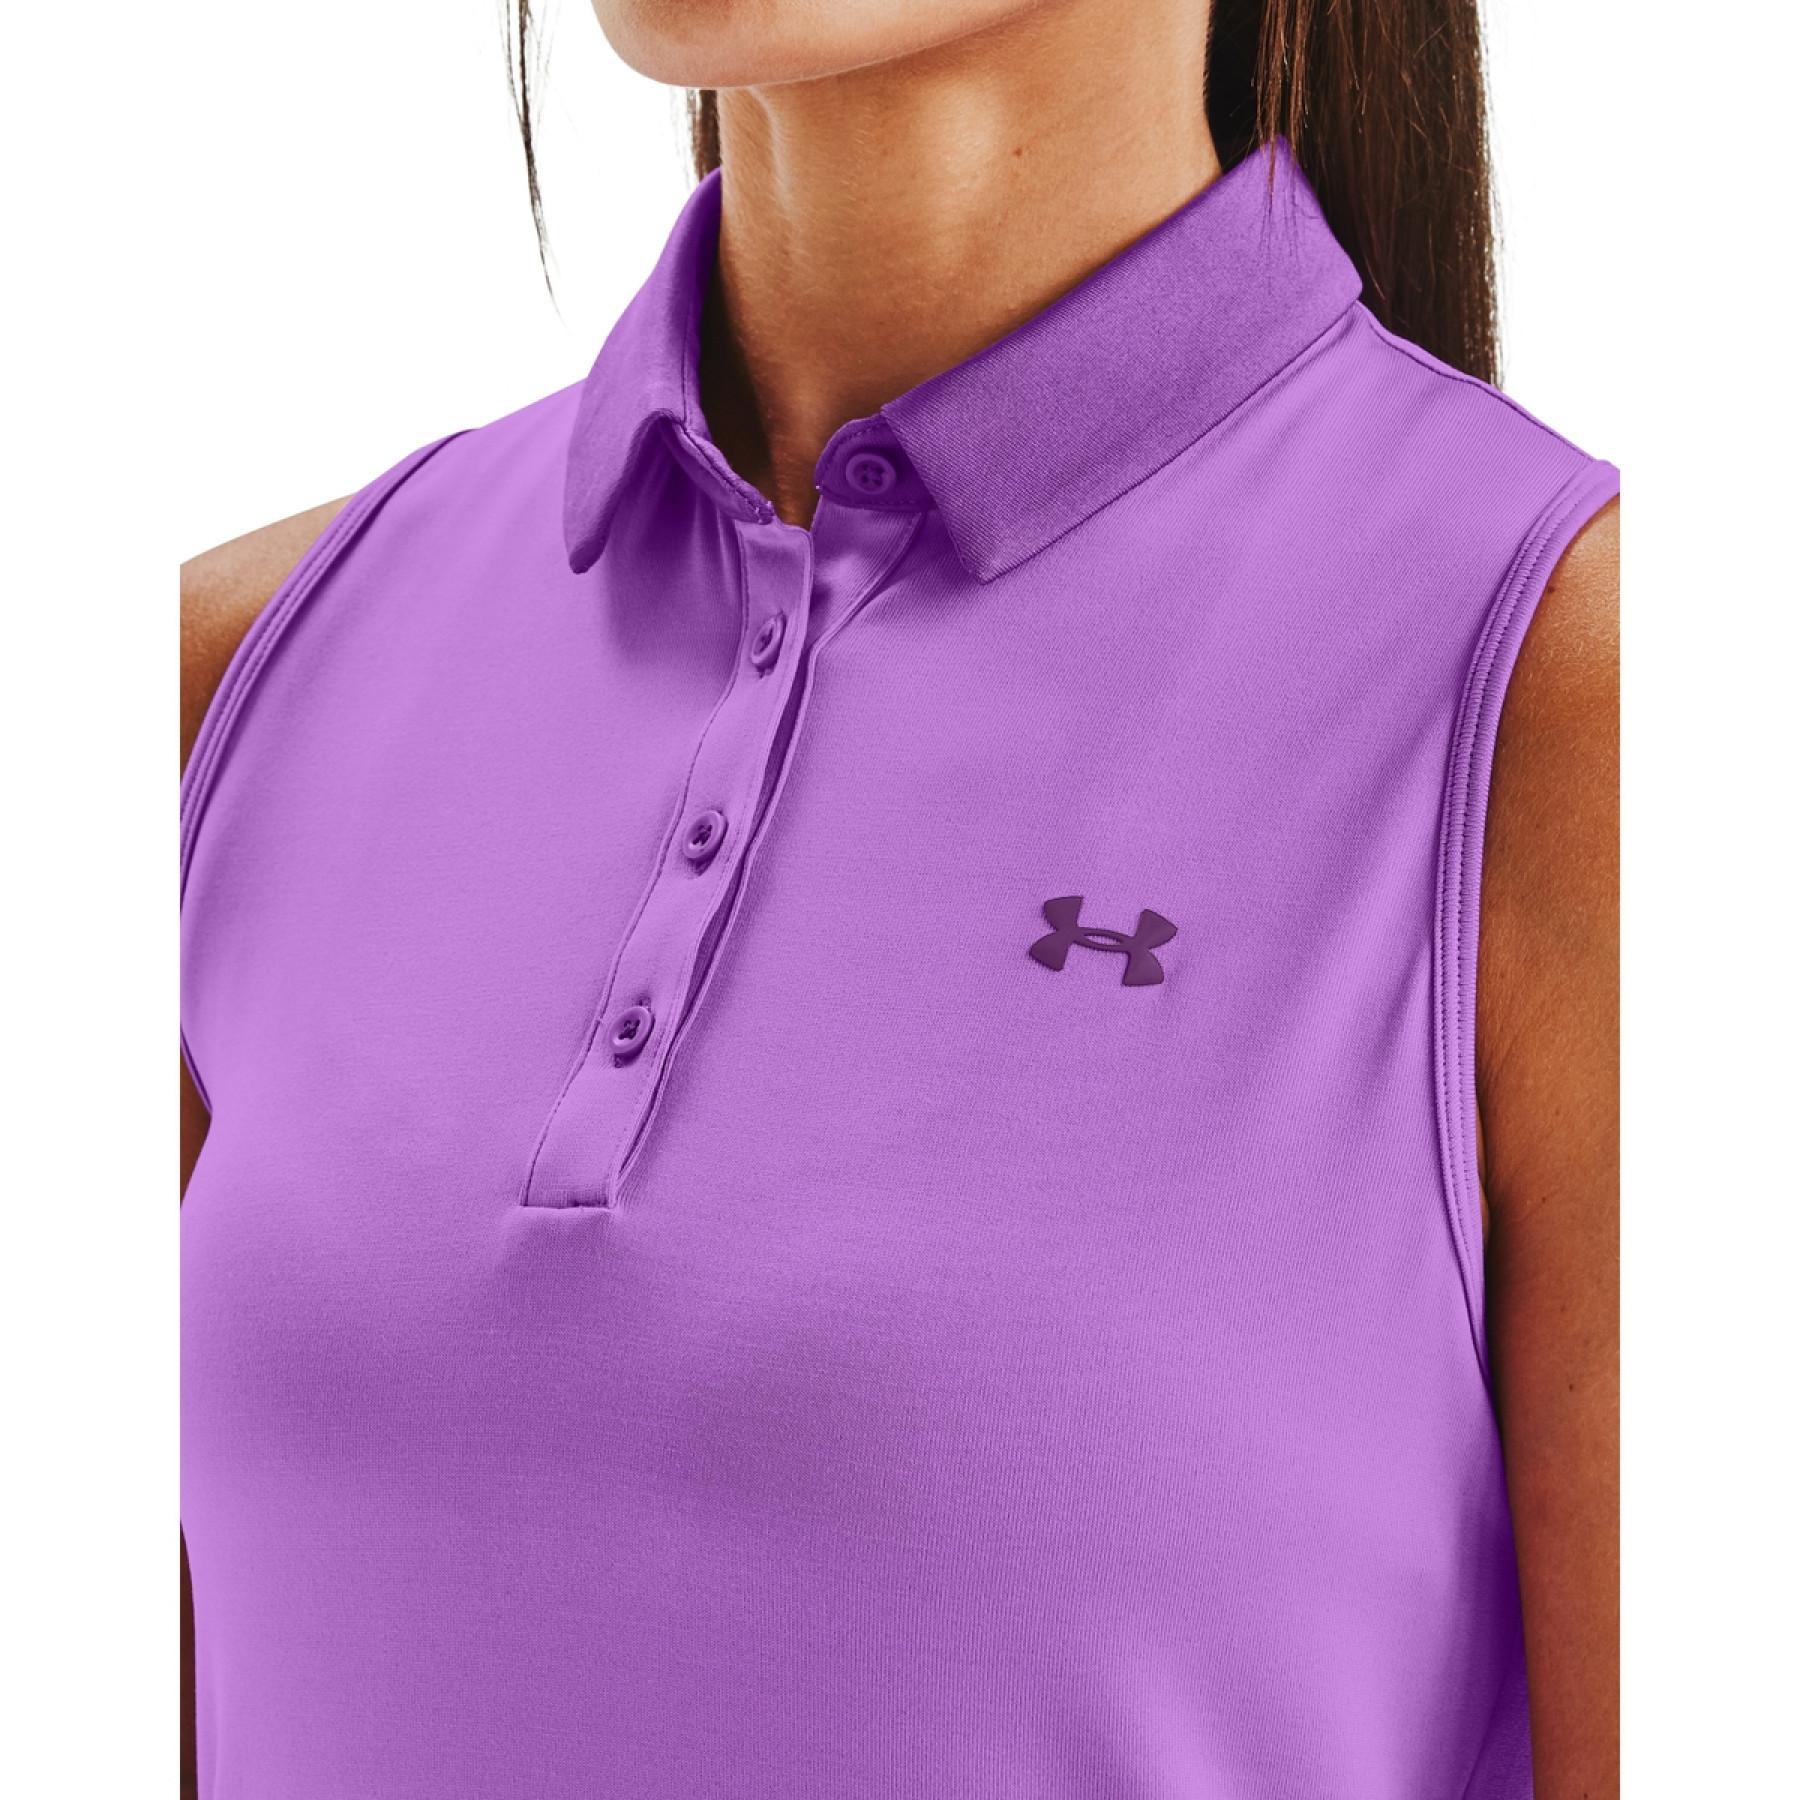 Women's polo shirt Under Armour Zinger sans manches